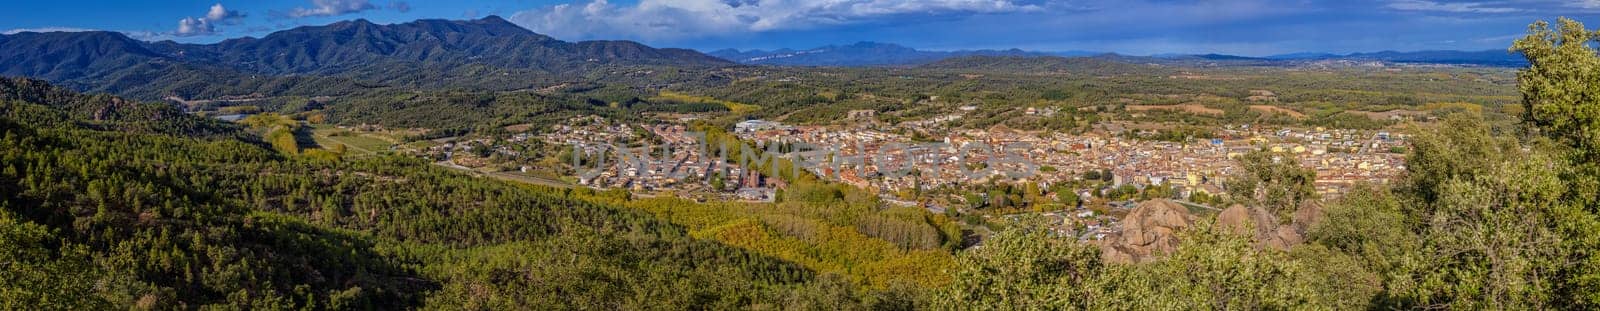 Panoramic picture small town Santa Coloma de Farners in Catalonia of Spain by Digoarpi